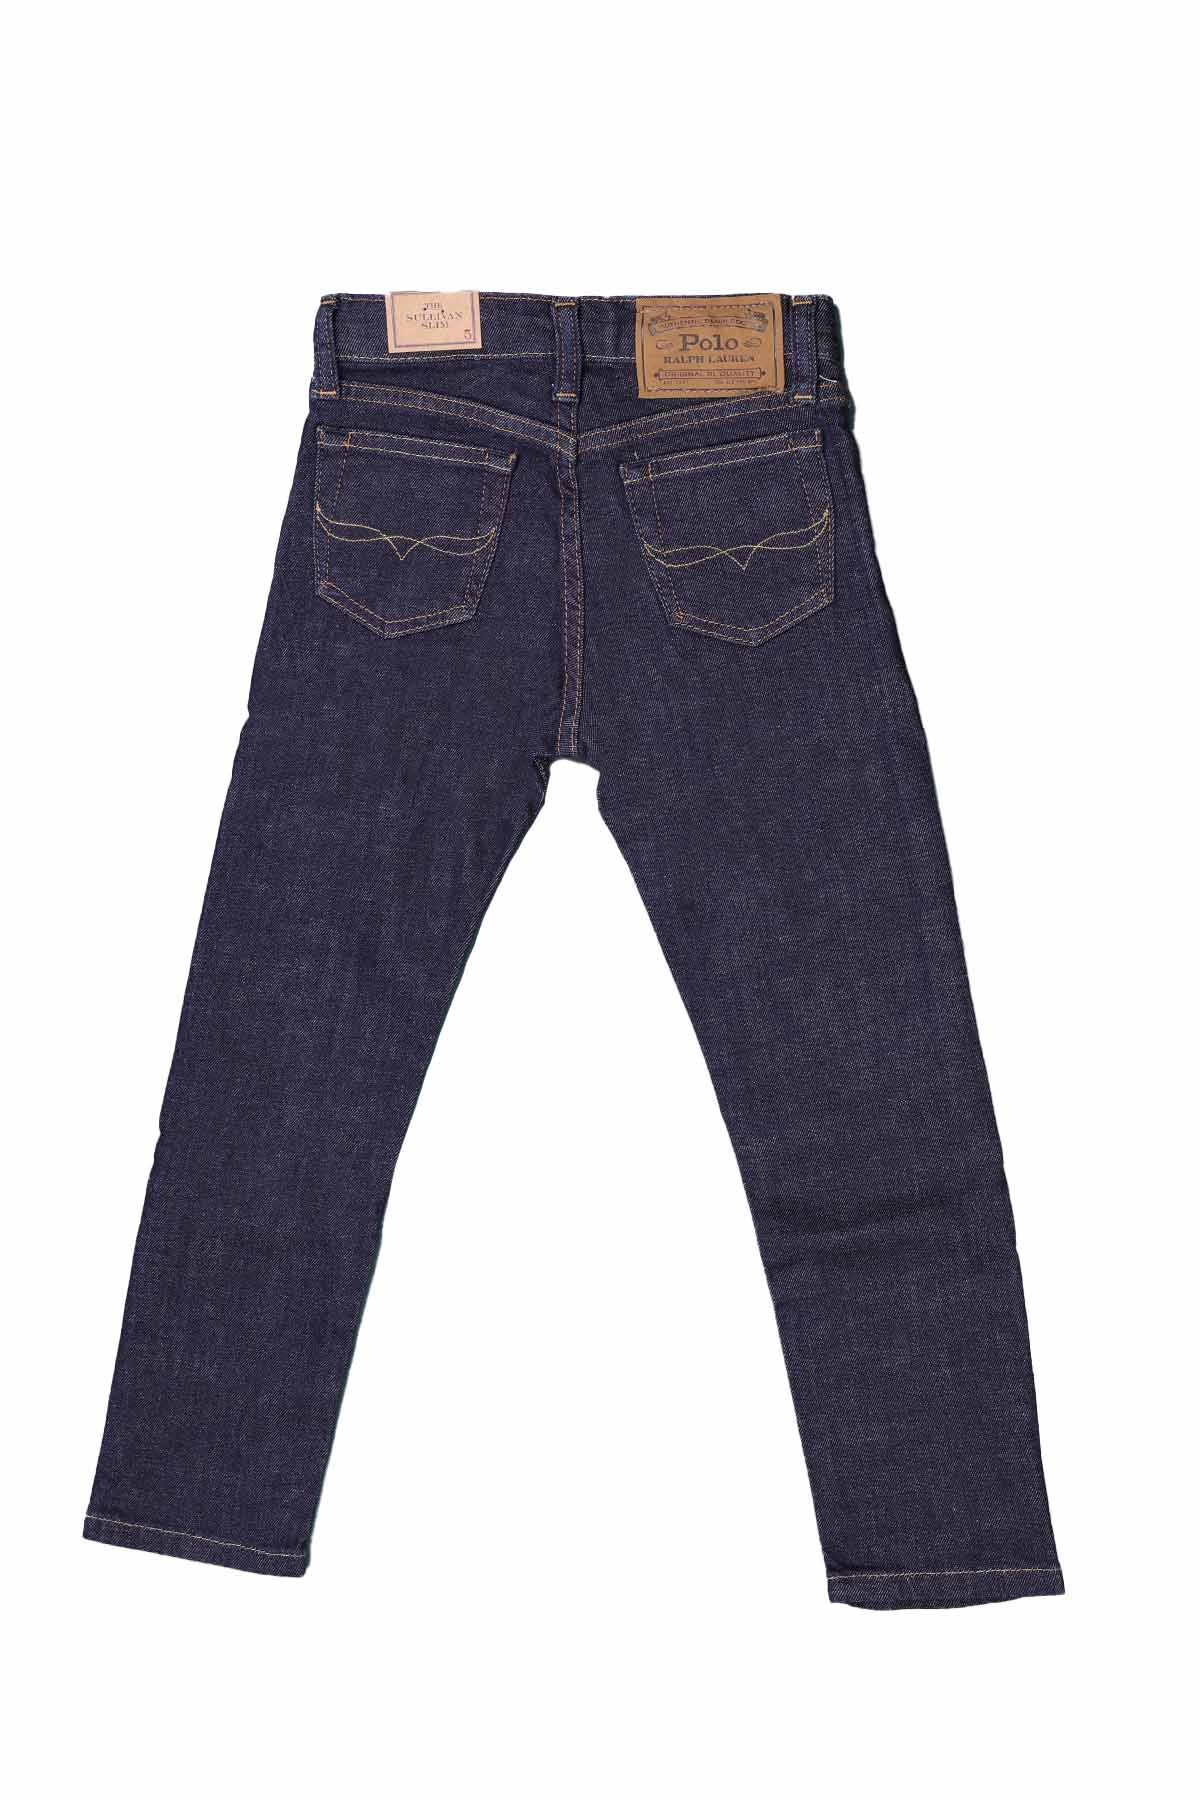 Polo Ralph Lauren 8-10 Yaş Erkek Jeans-Libas Trendy Fashion Store